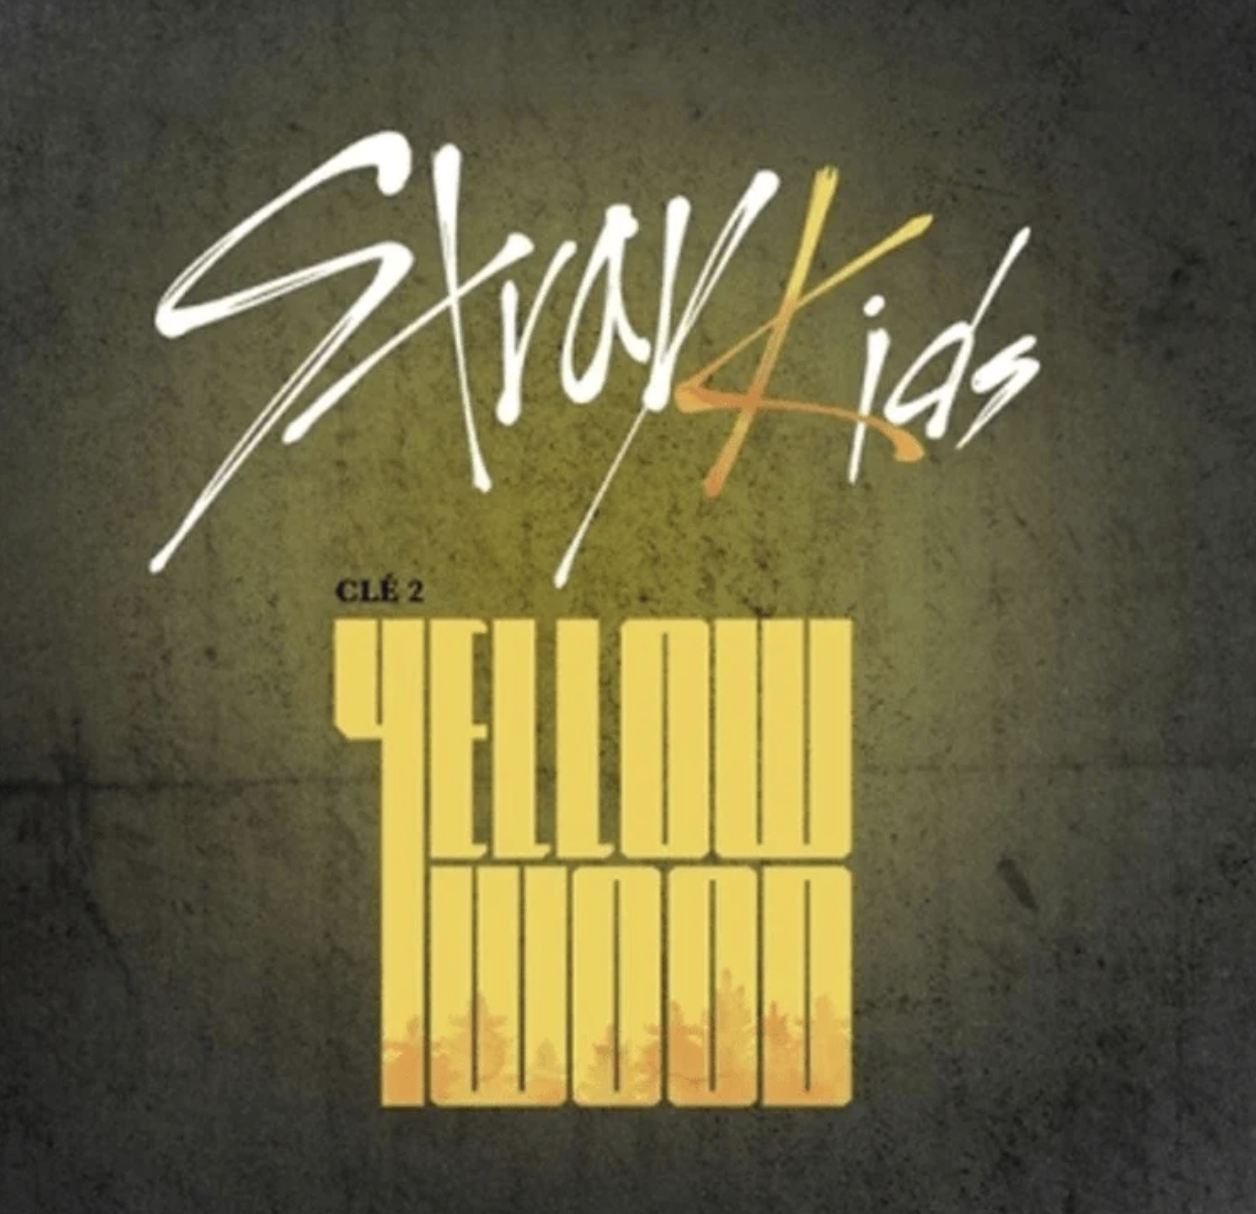 STRAY KIDS - SPECIAL ALBUM - CLE 2 : YELLOW WOOD [RANDOM VER.]